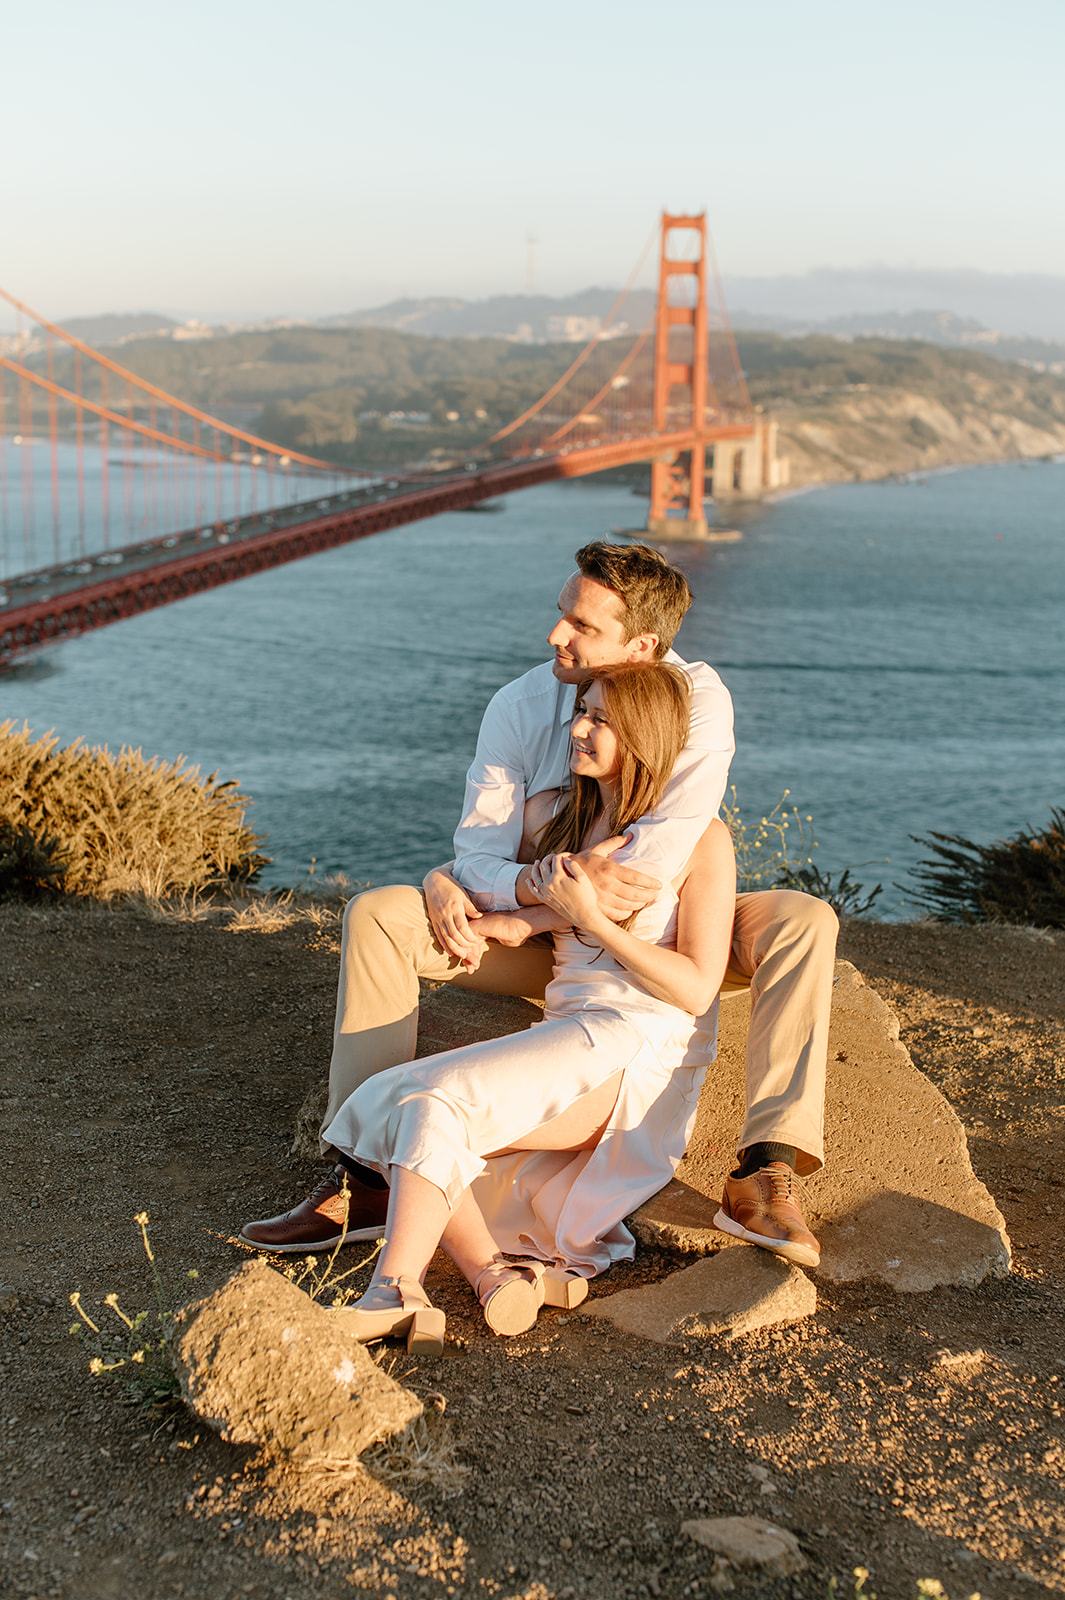 Sydney Jai Photography - San Francisco Engagement Photos, Golden Gate Bridge Engagement Photoshoot